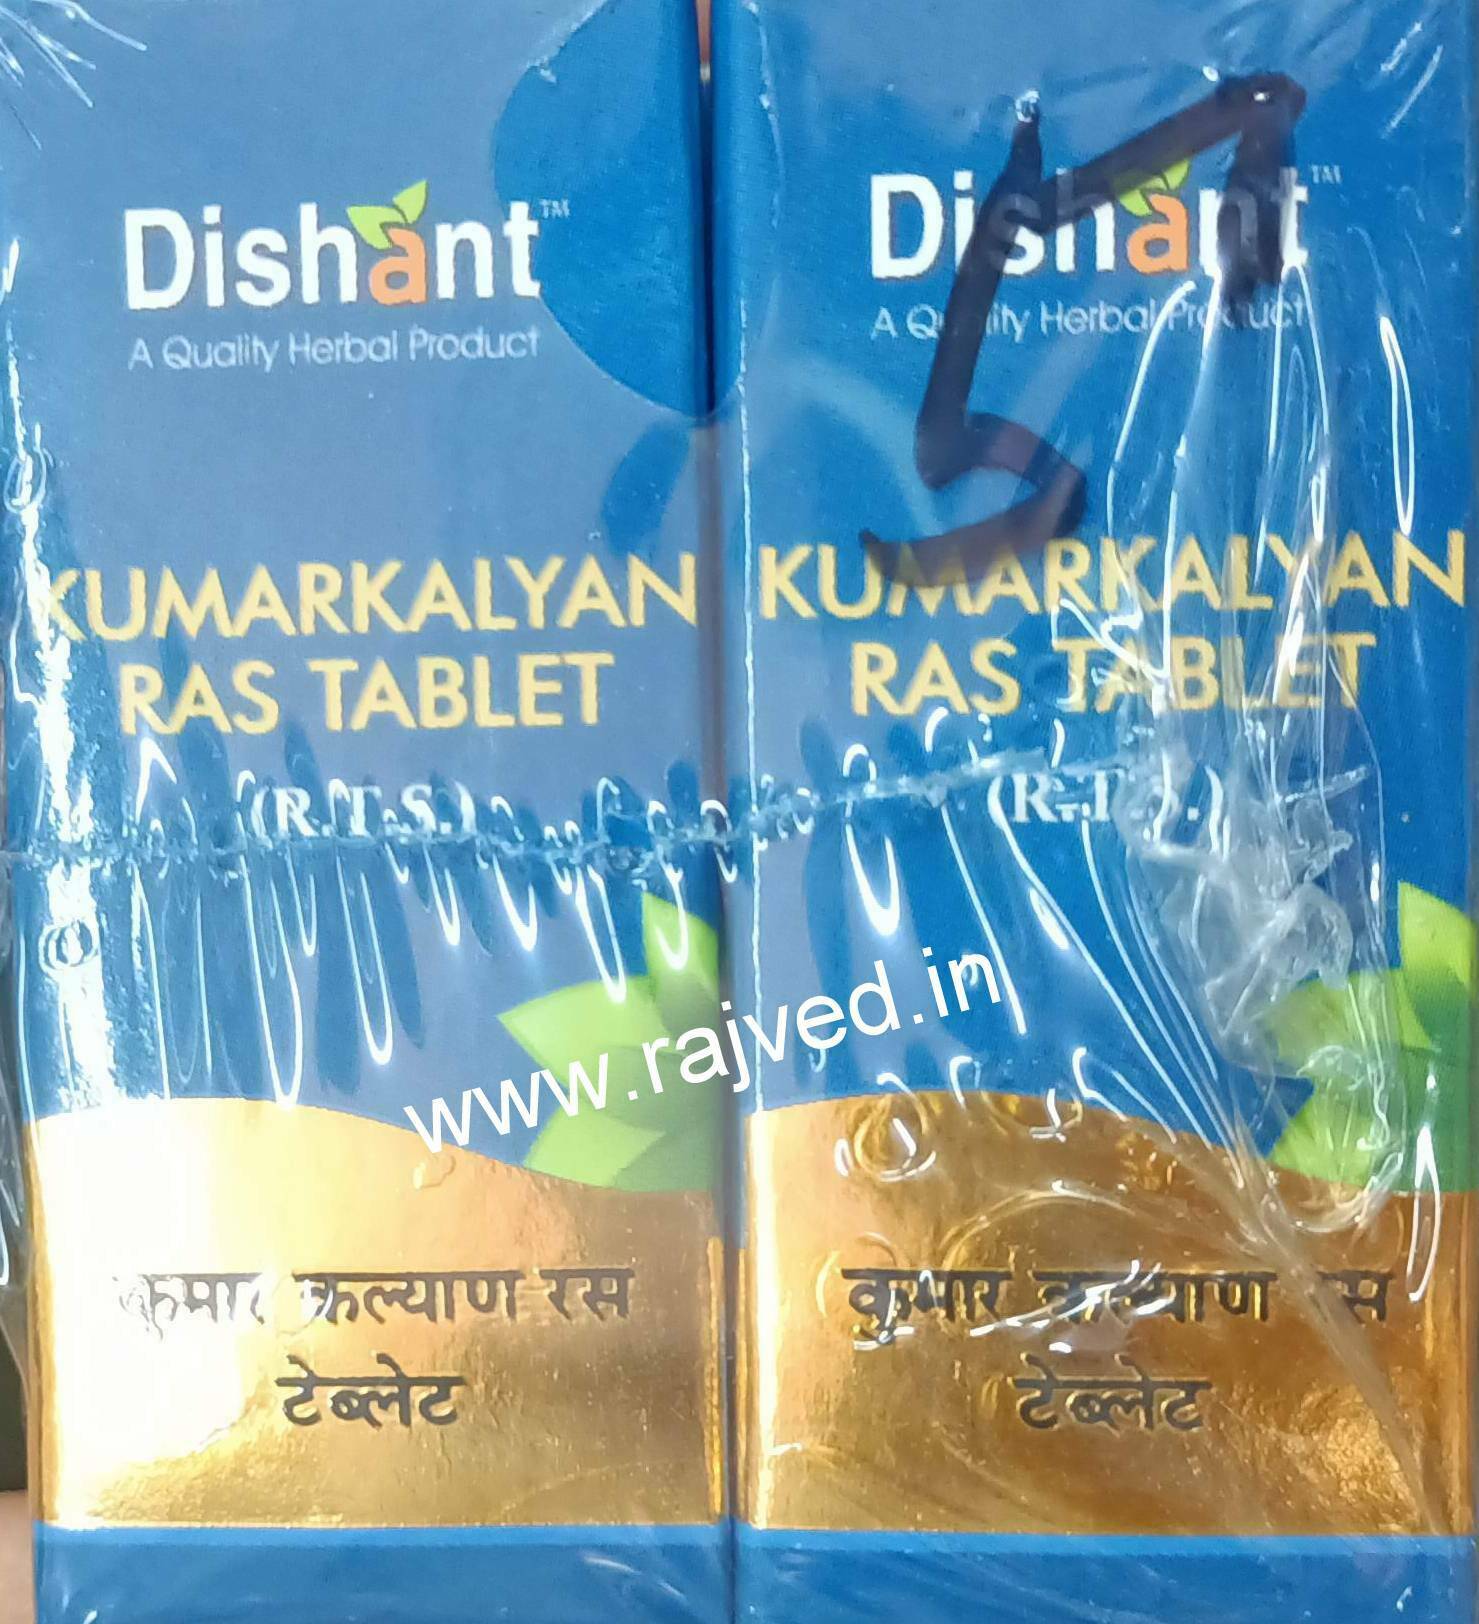 kumarkalyan ras tablets gold 50 tab upto 20% off dishant ayurvedic suppliers